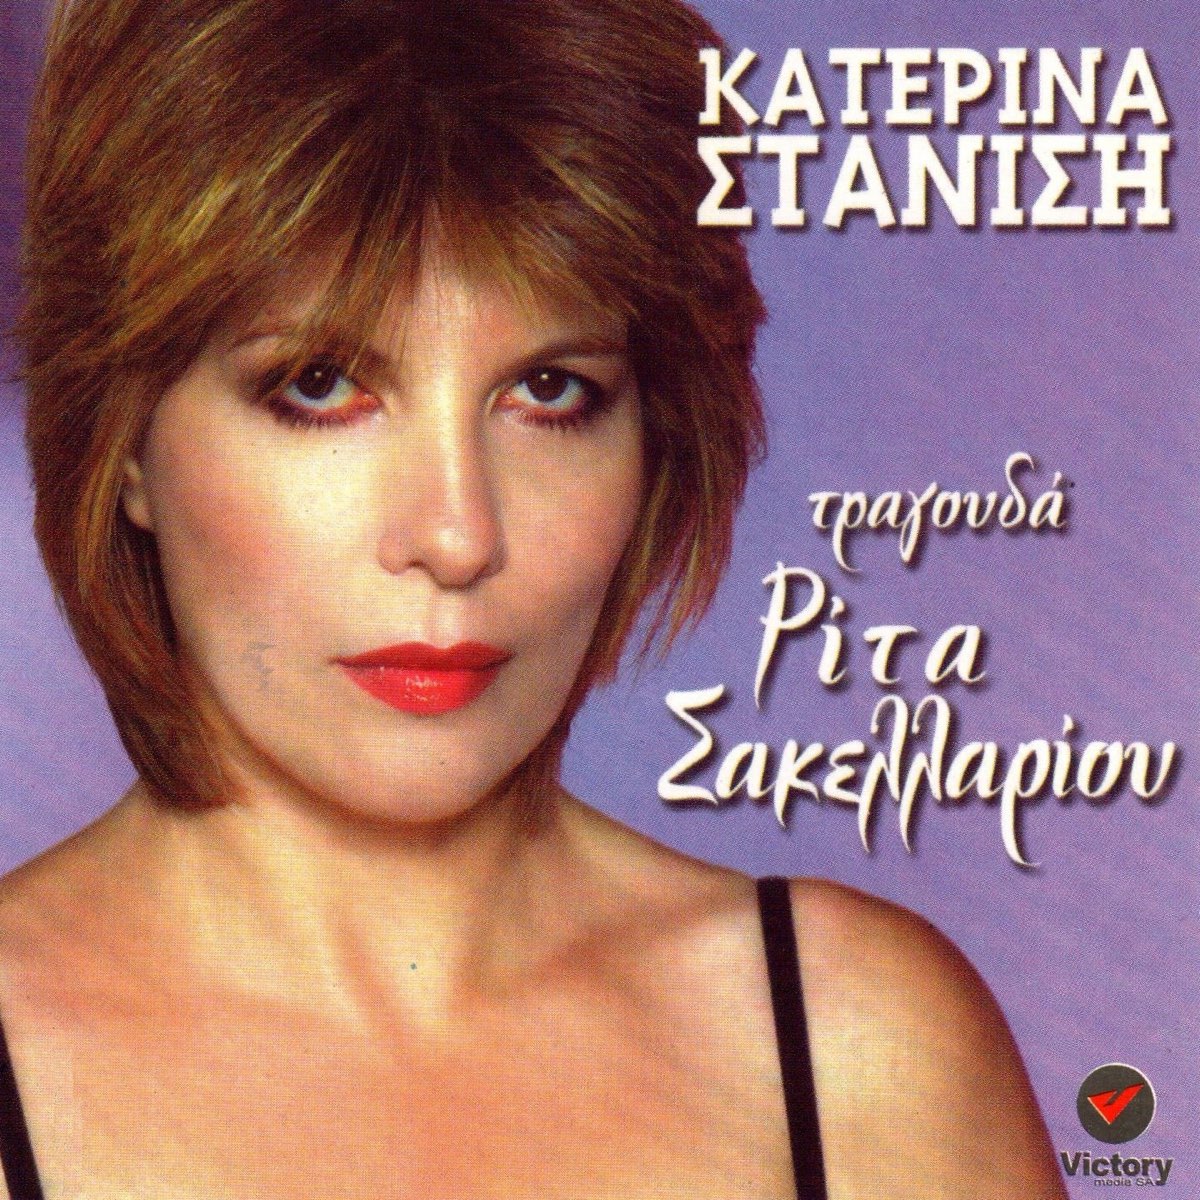 I Katerina Stanisi Tragouda Rita Sakellariou - Album by Katerina Stanisi -  Apple Music